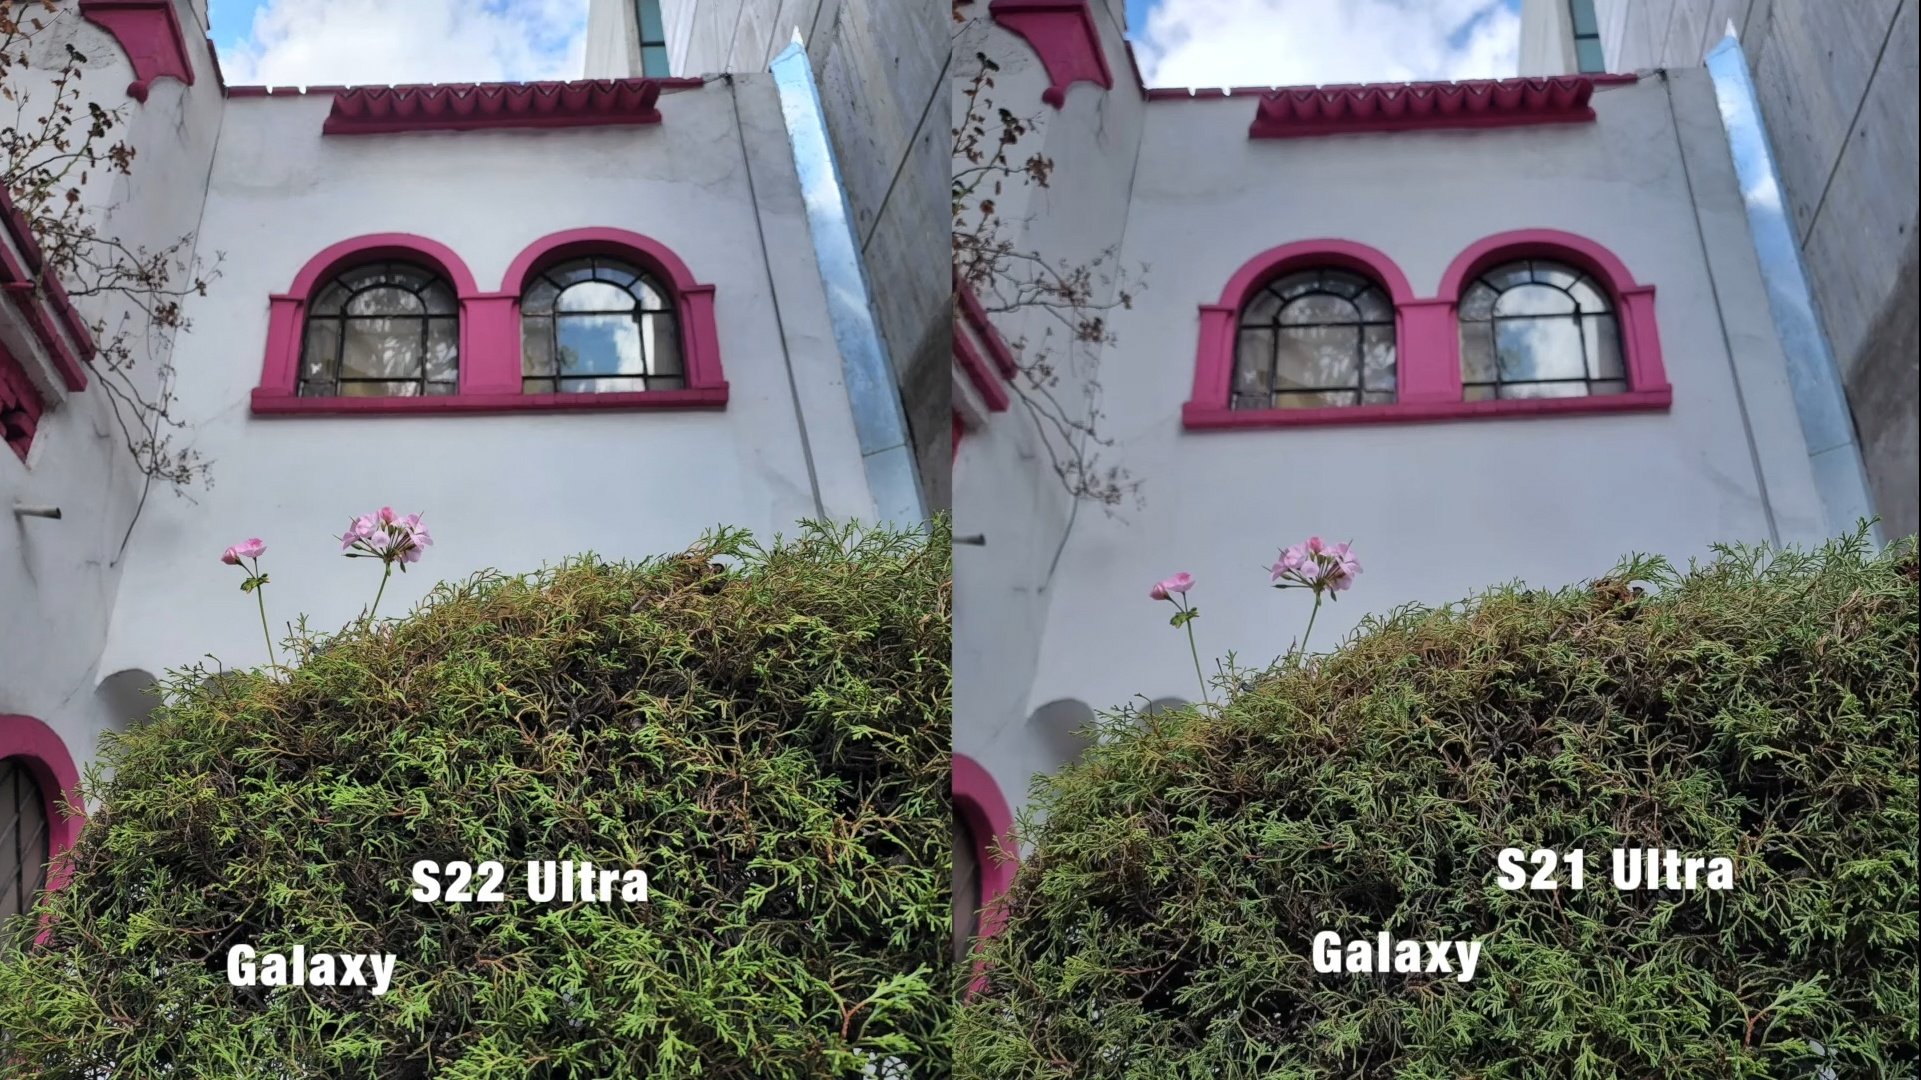 Alvin on X: Galaxy S21 Ultra vs Galaxy S22 Ultra All using each